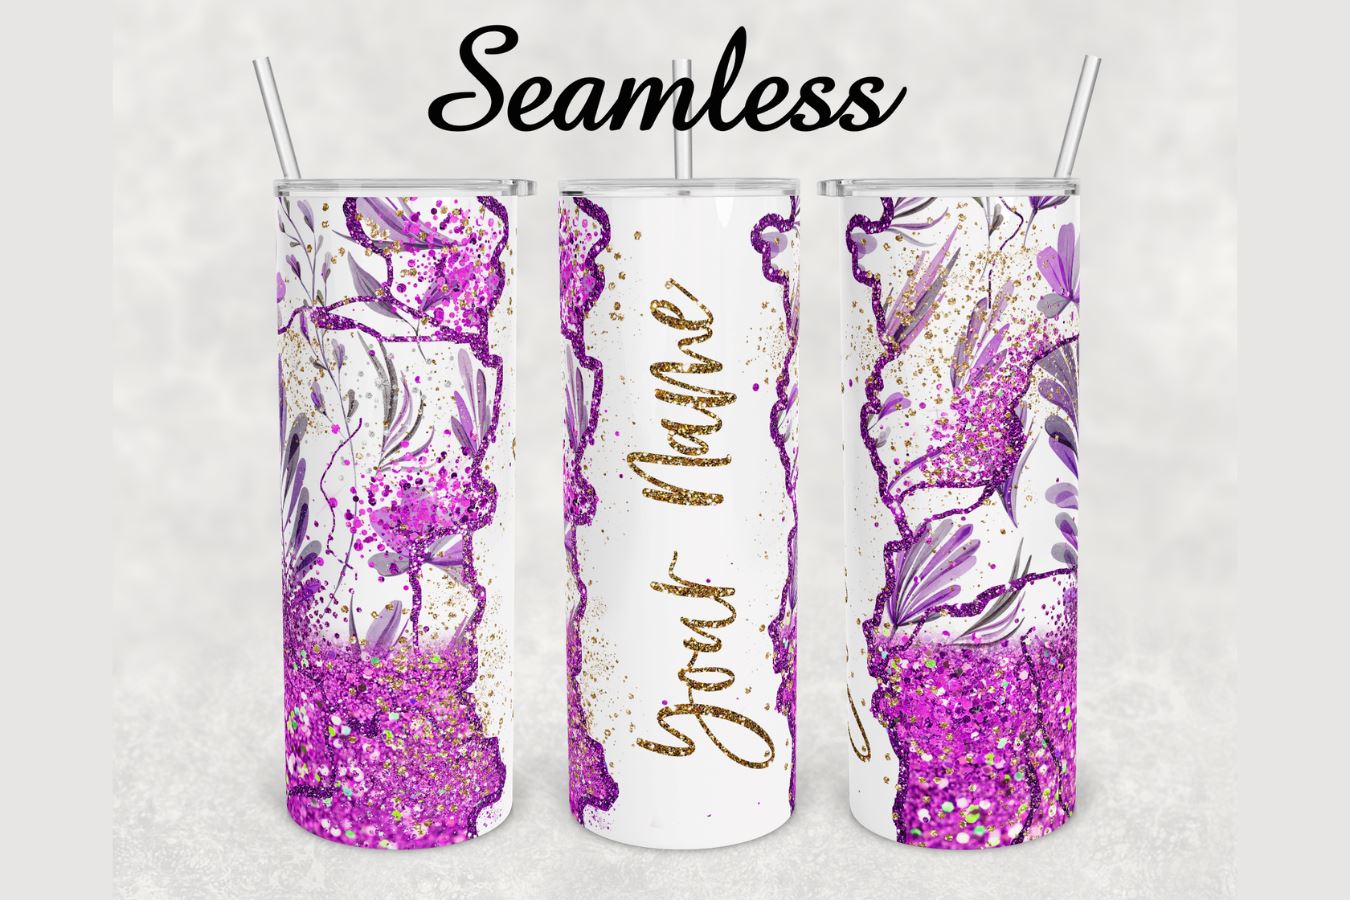 Purple Tumbler Design Glitter Sublimation Tumble